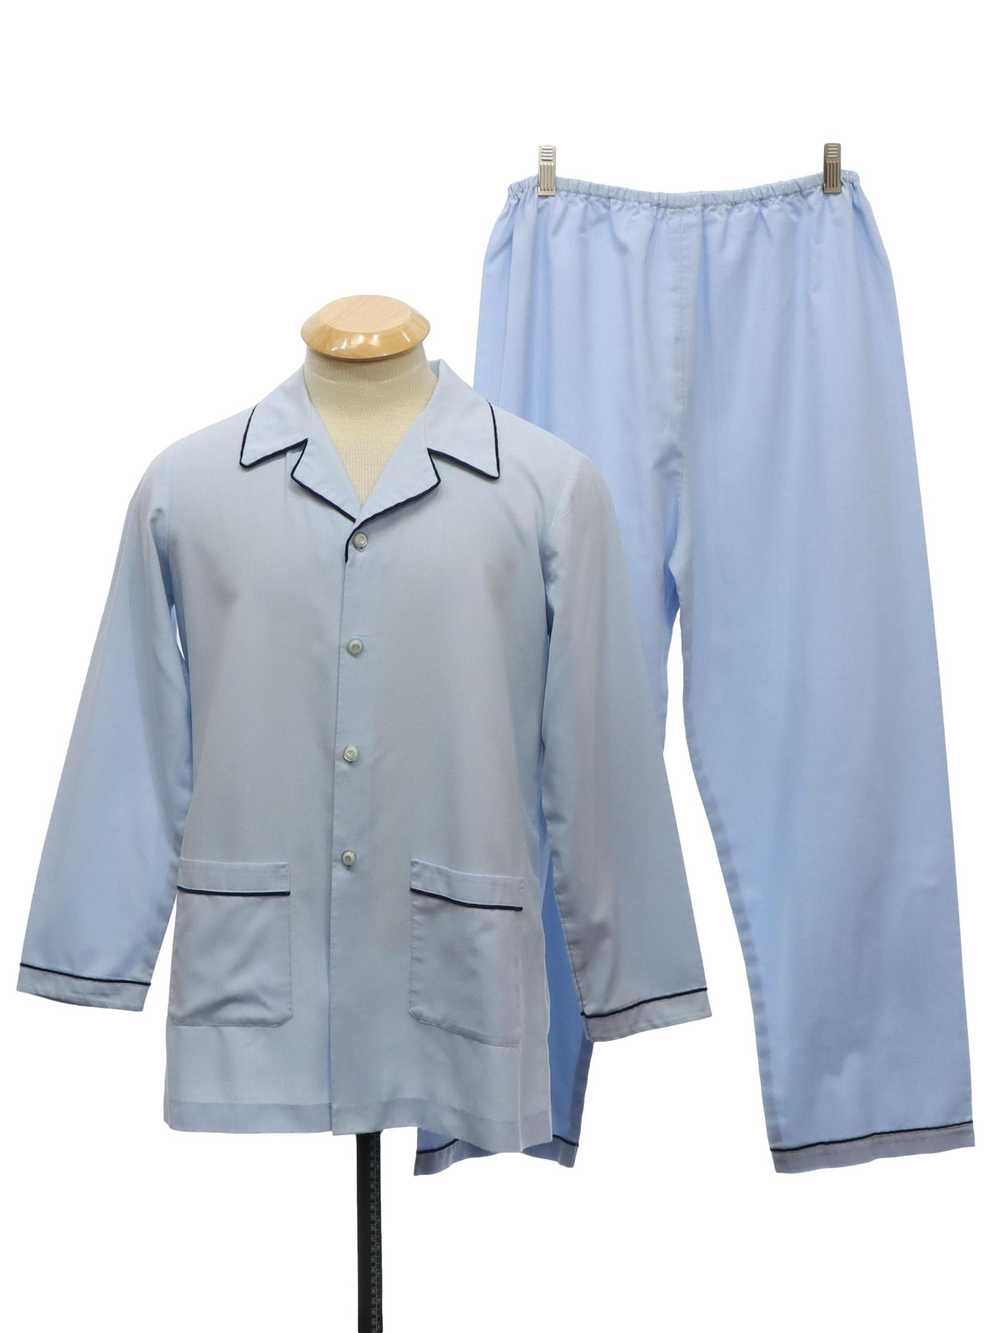 1960's Unisex Ladies or Boys Pajamas - Gem